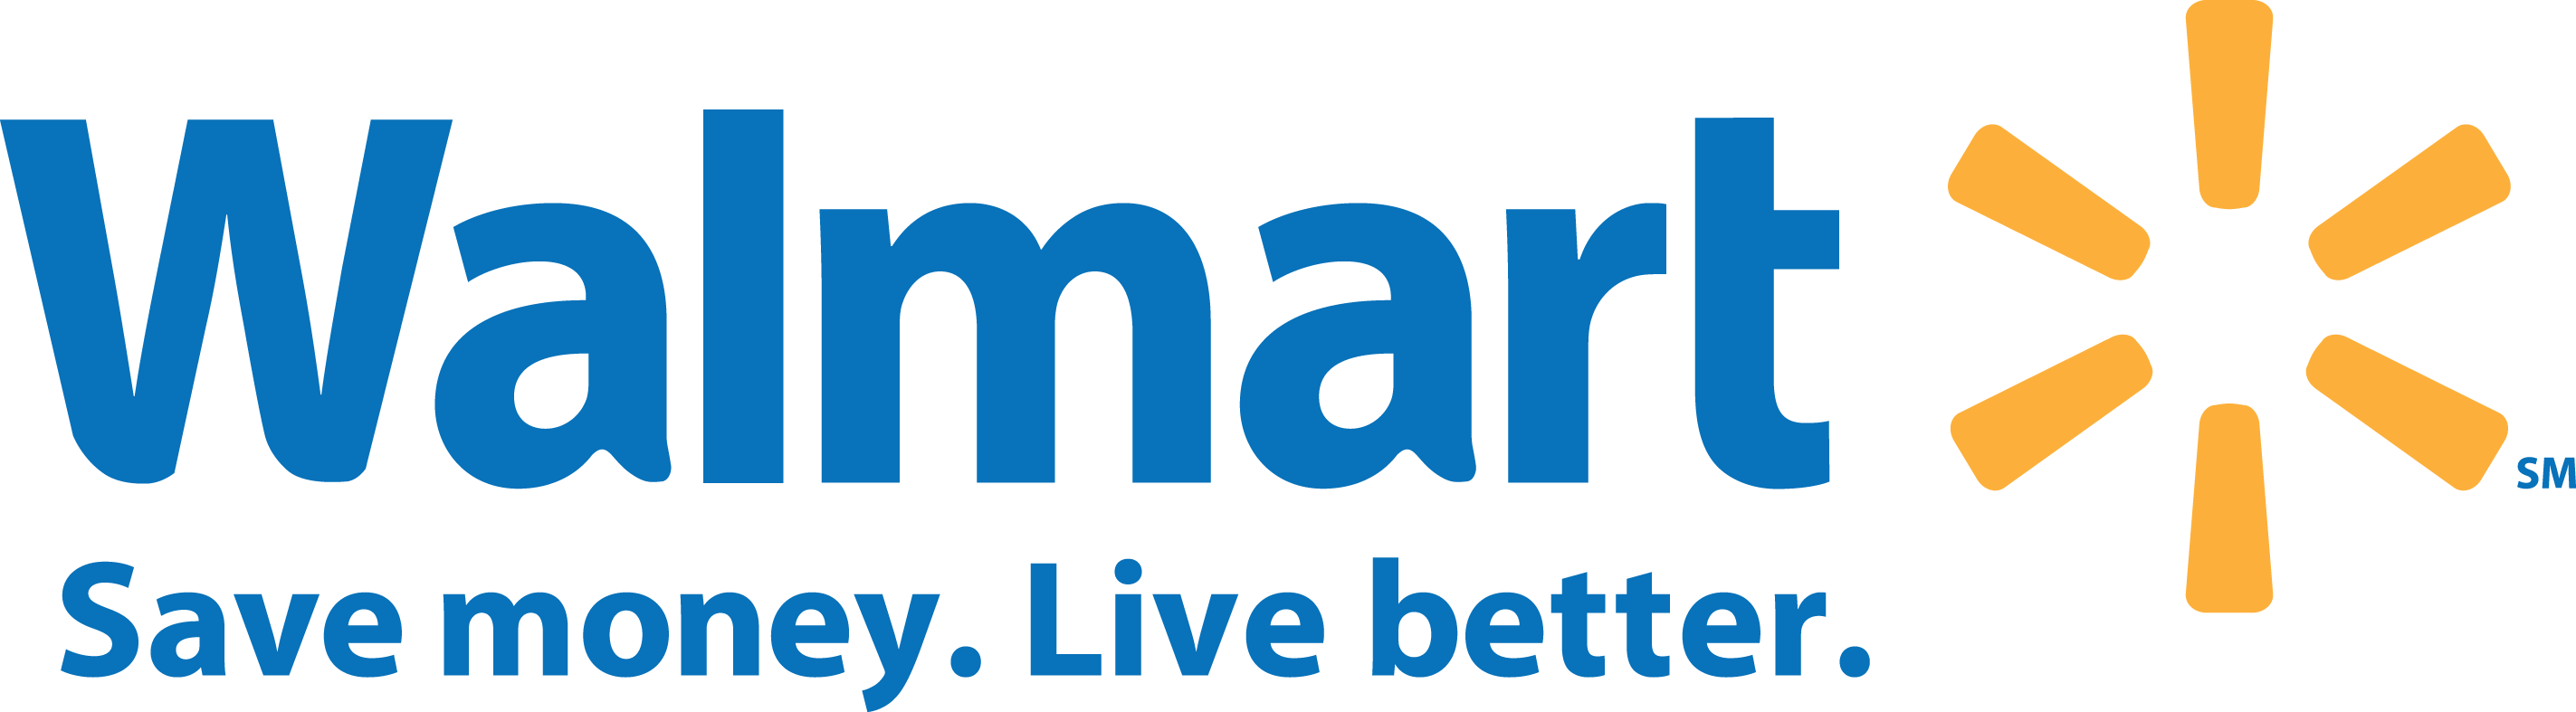 walmart-logo-6